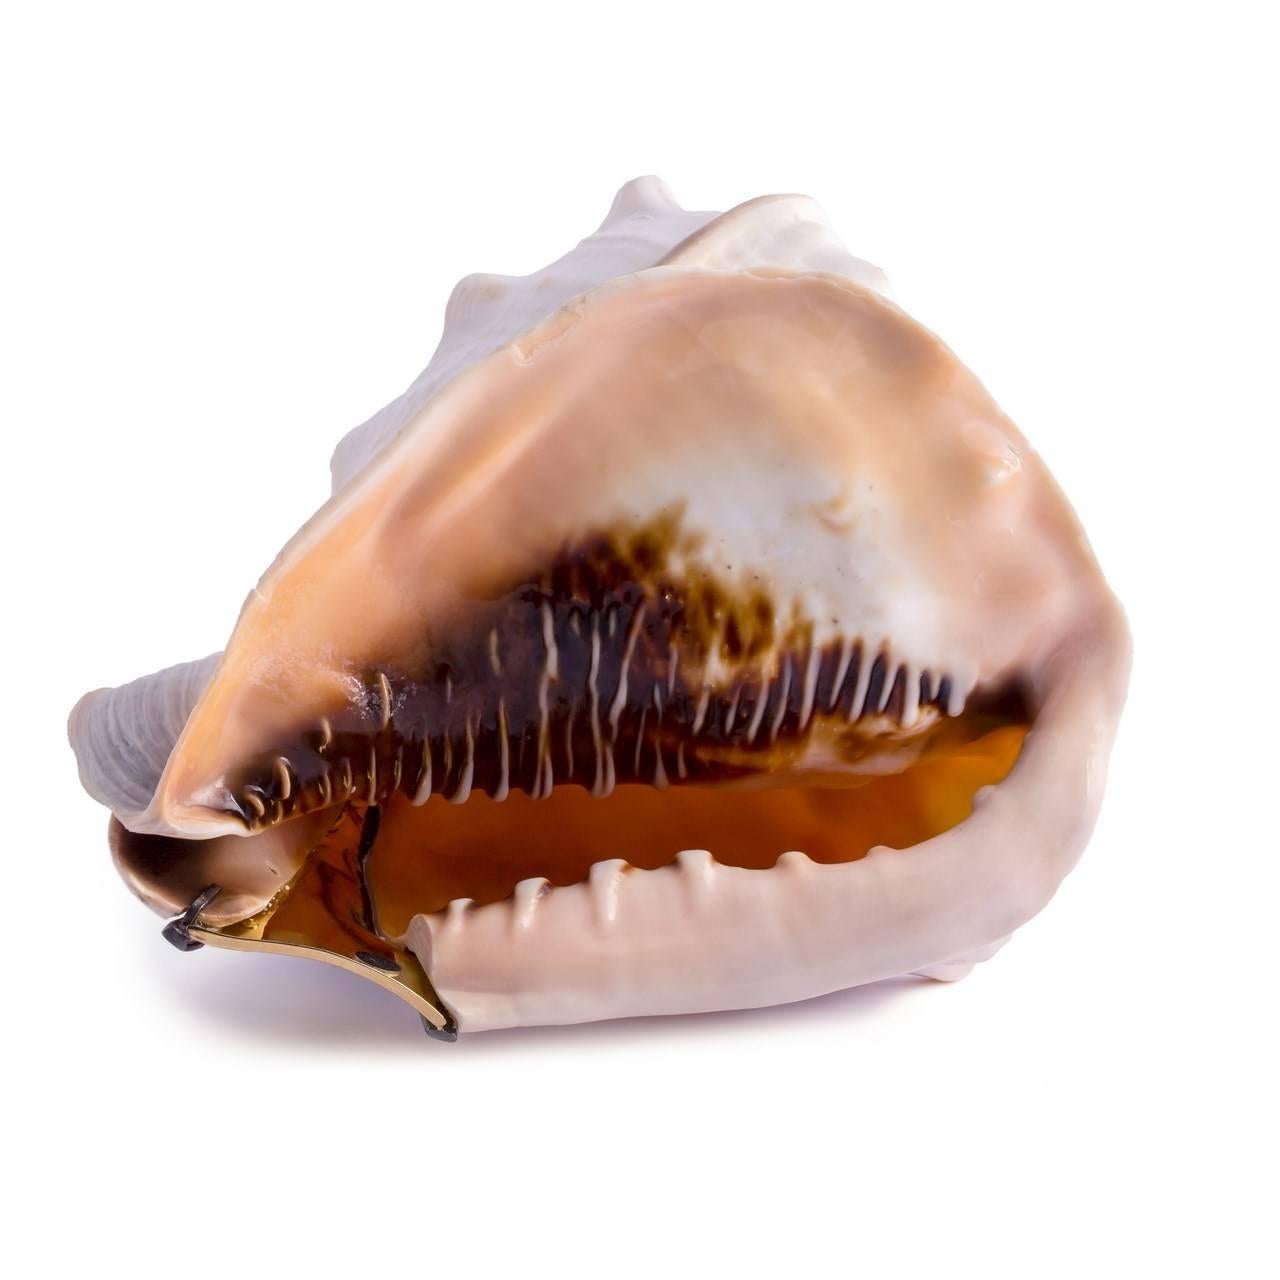 Amedeo Cerniera One of a Kind Hand-Carved Sardonyx Shell For Sale 1